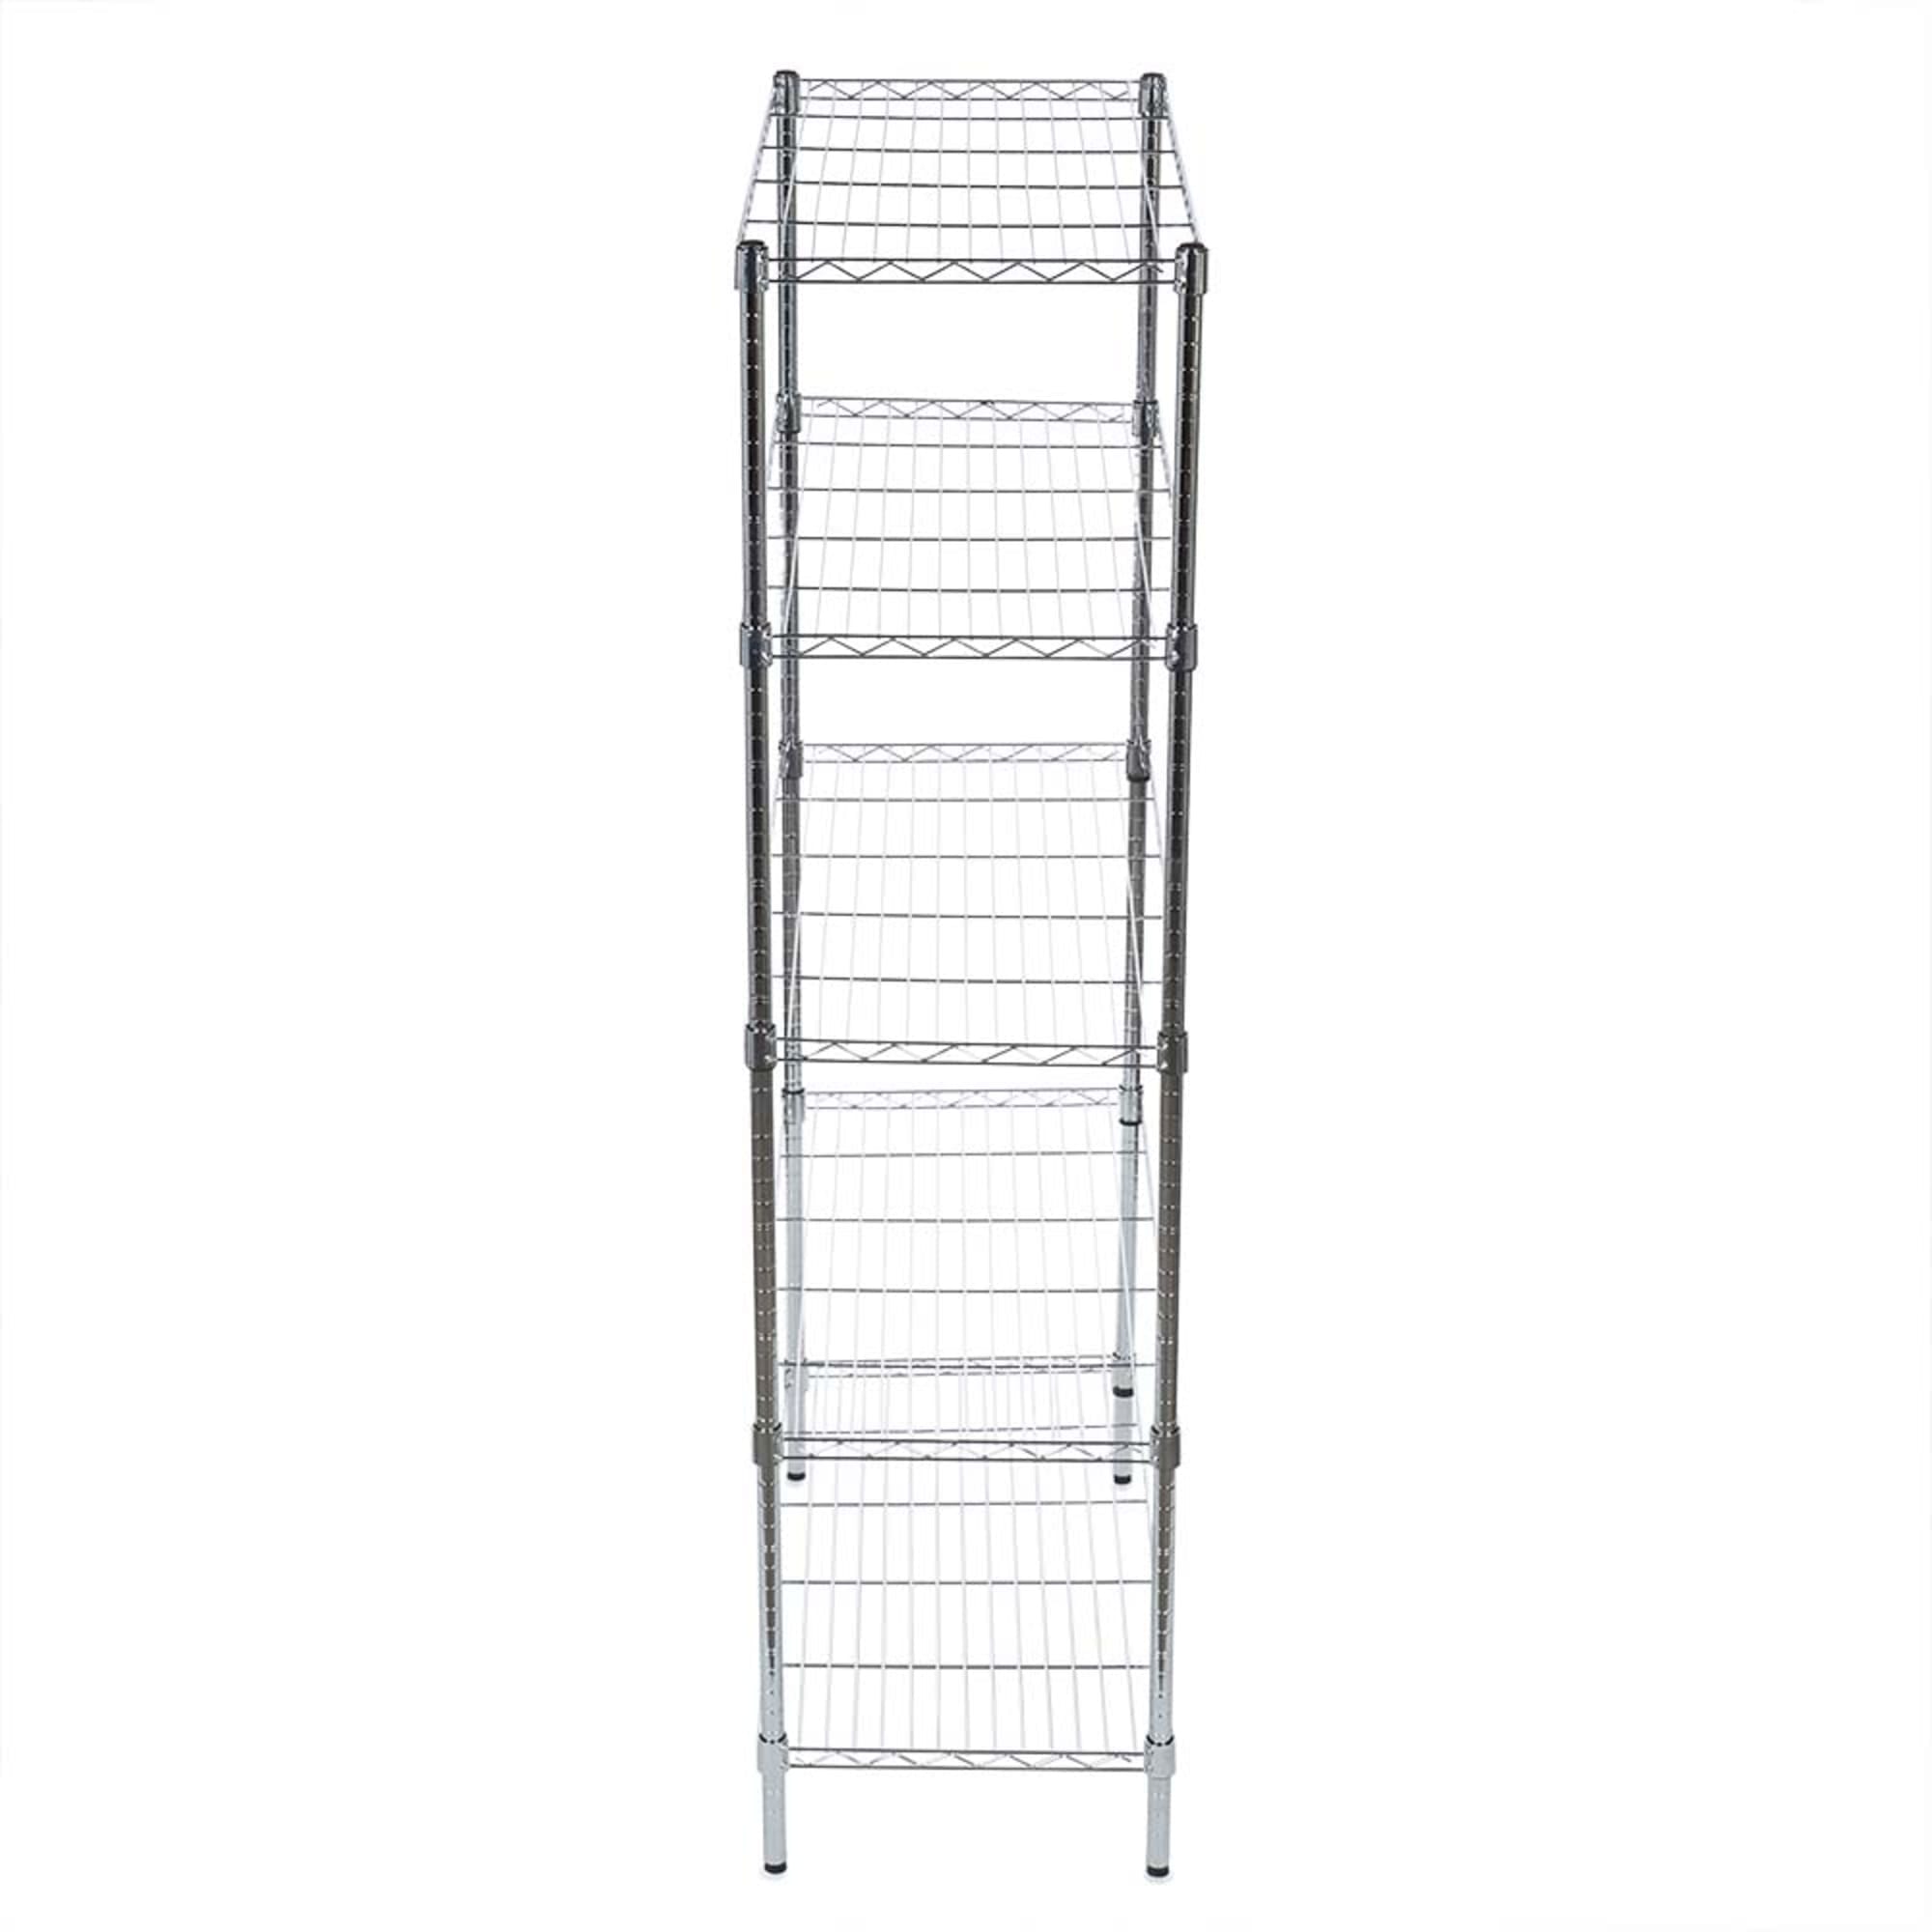 Home Basics 5 Tier Steel Wire Shelf Rack, Chrome $100.00 EACH, CASE PACK OF 1